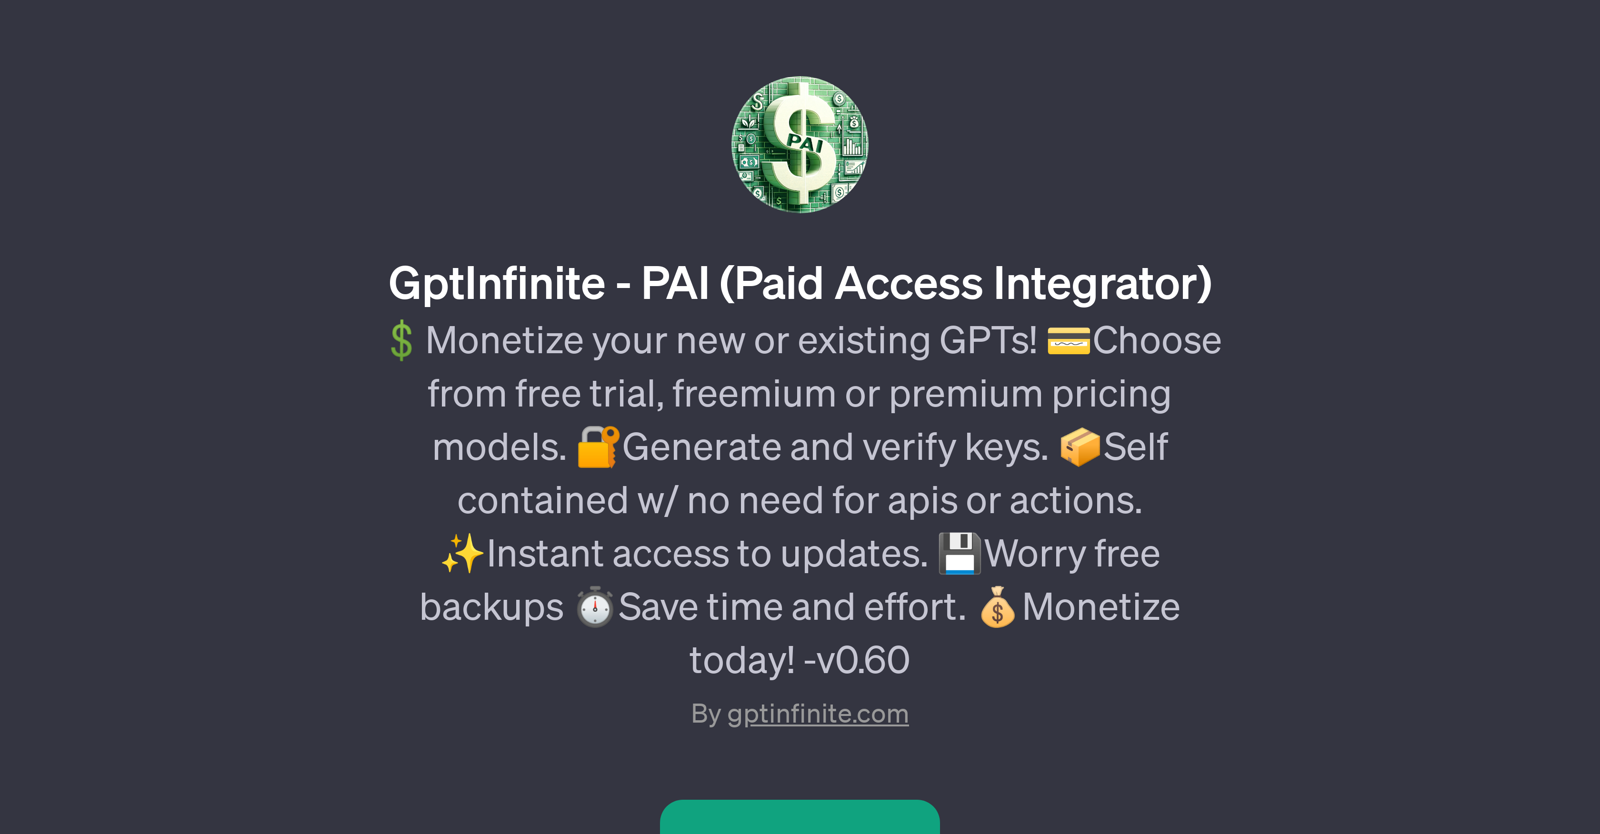 GptInfinite - PAI (Paid Access Integrator) website